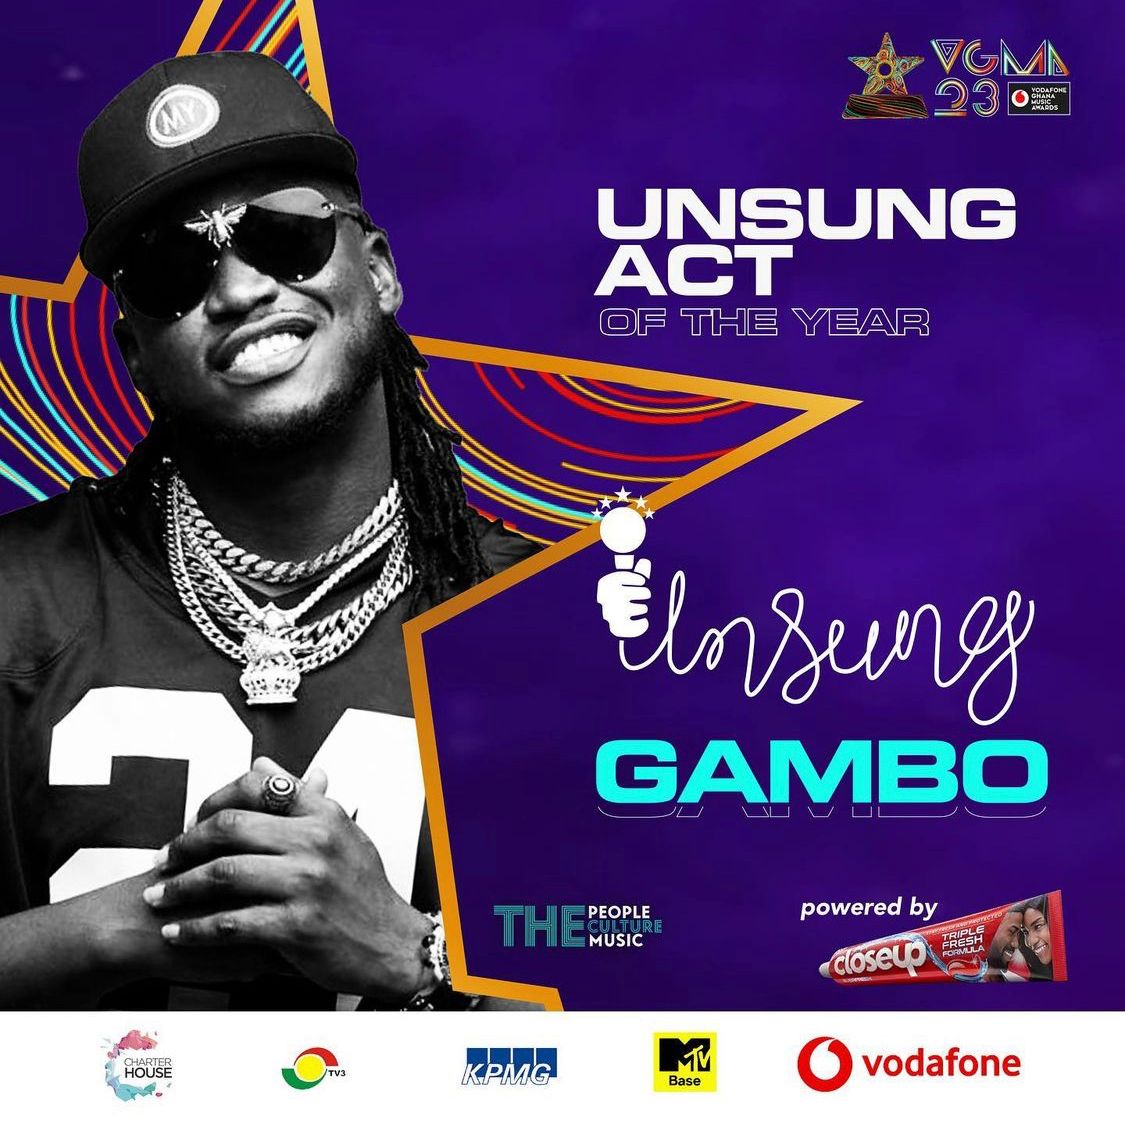 Gambo adjudged VGMA Unsung Act of the Year